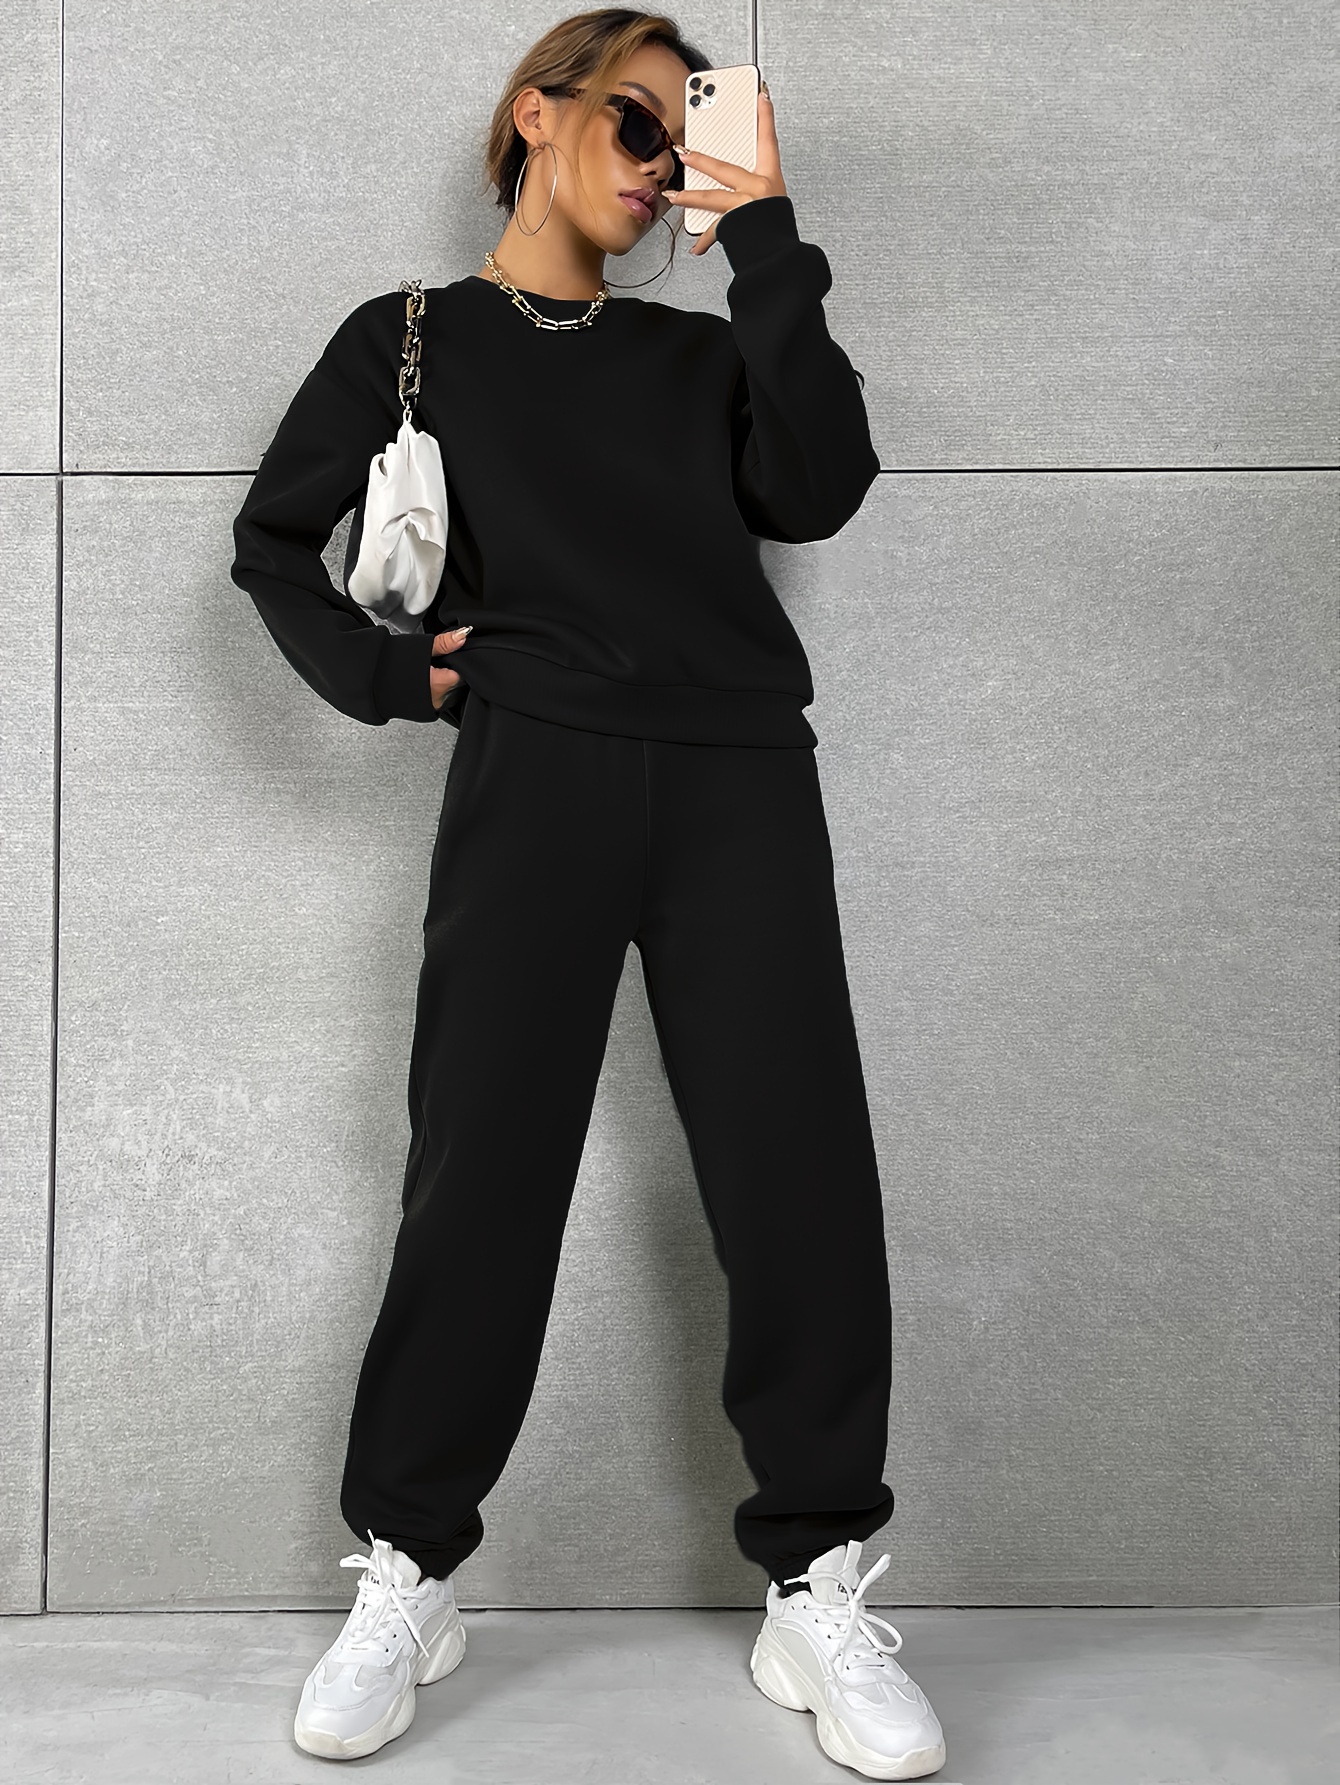 crewneck sweatshirt  Black yoga pants outfit, Yoga pants outfit, Grey yoga  pants